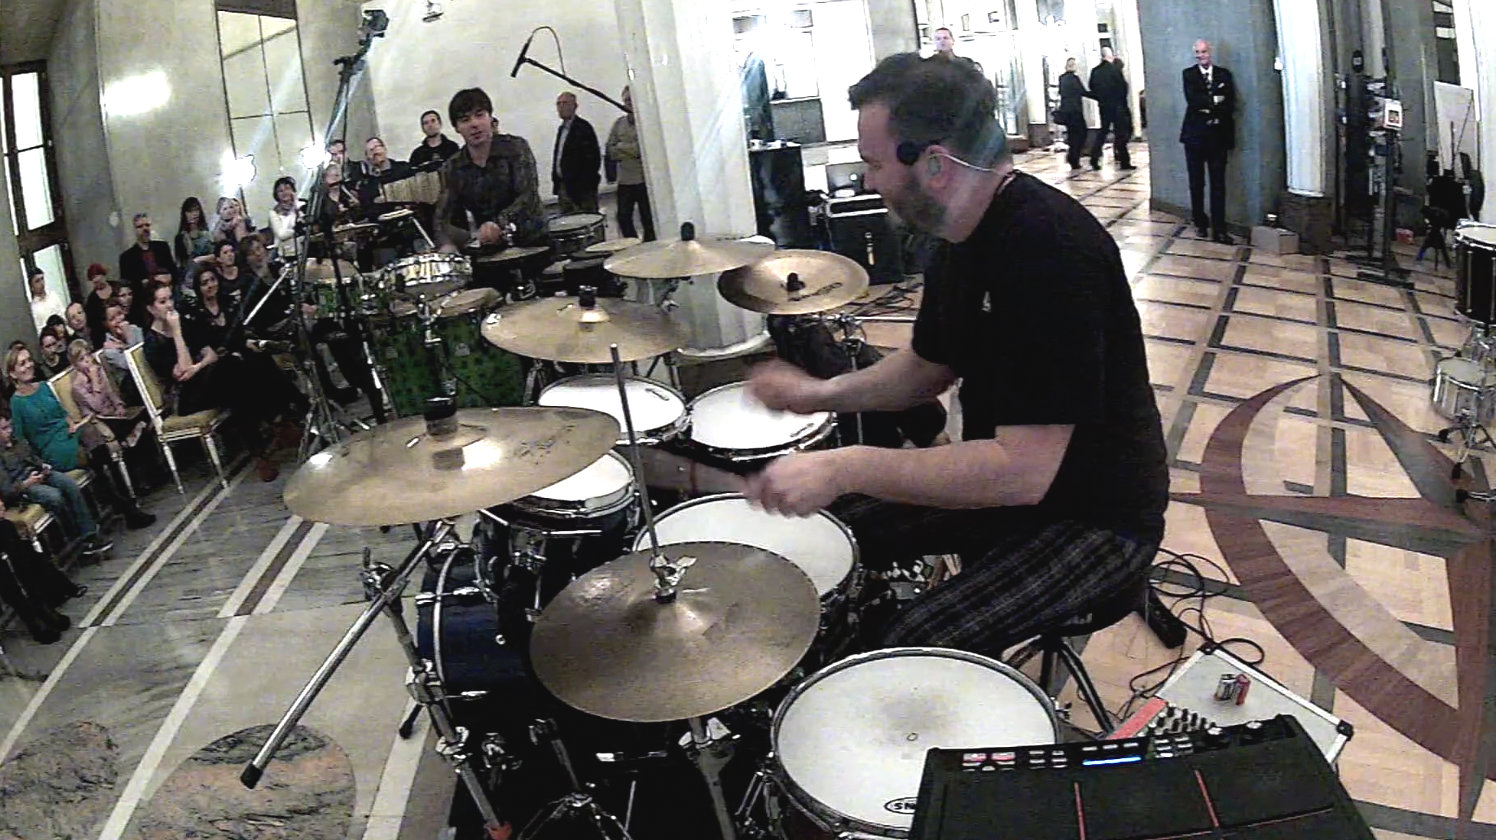 La folle journee de Varsovie 2013 – Drums and Percussion